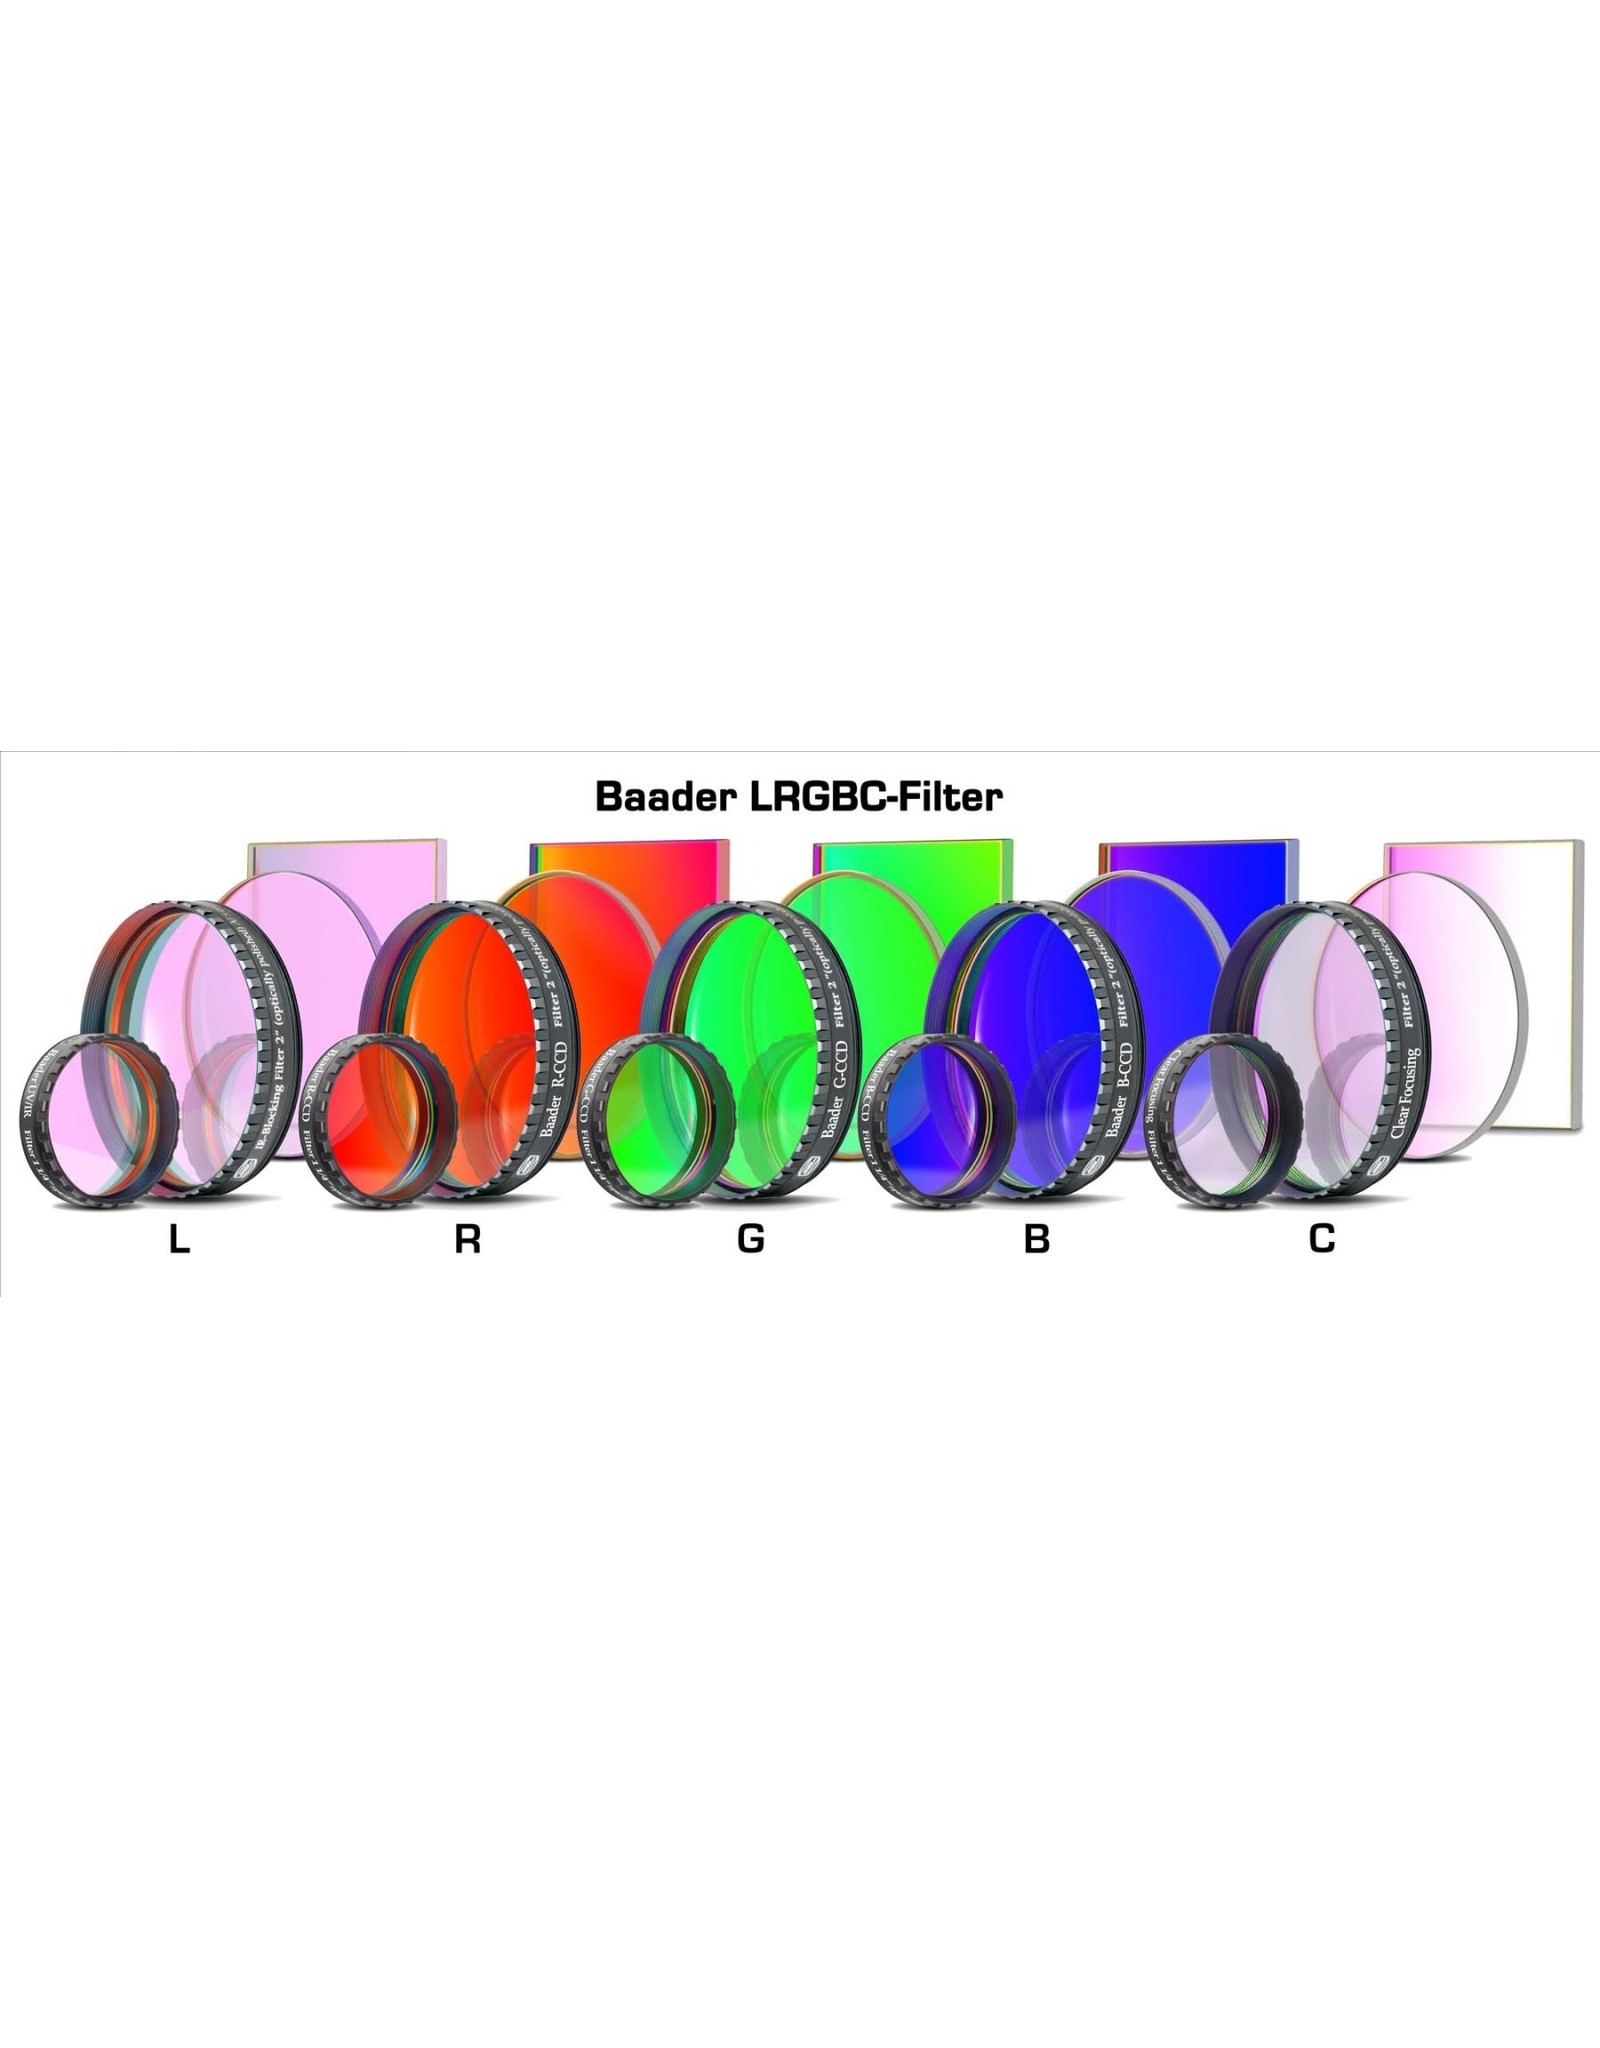 Baader Planetarium Baader L-RGB-C CCD-Filterset (Specify Size)